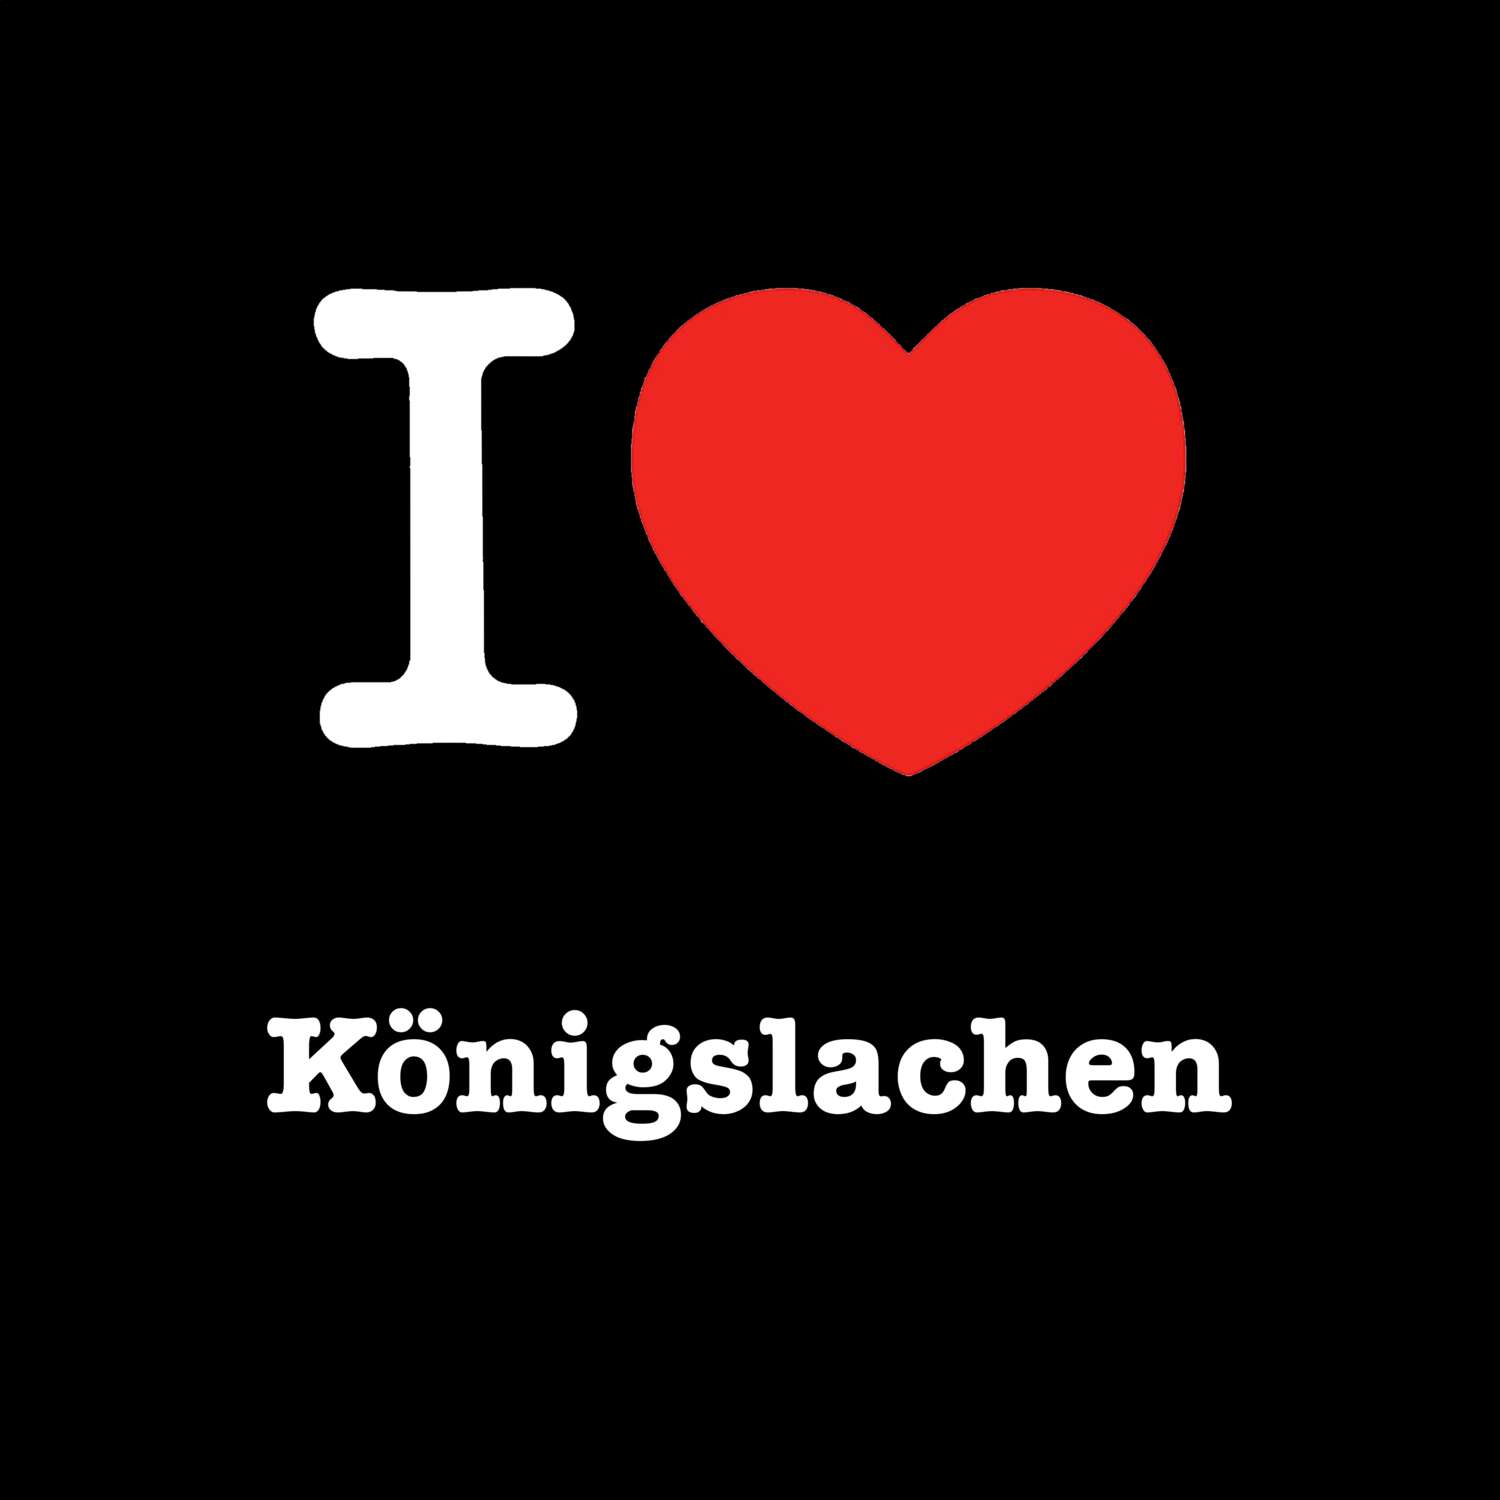 Königslachen T-Shirt »I love«